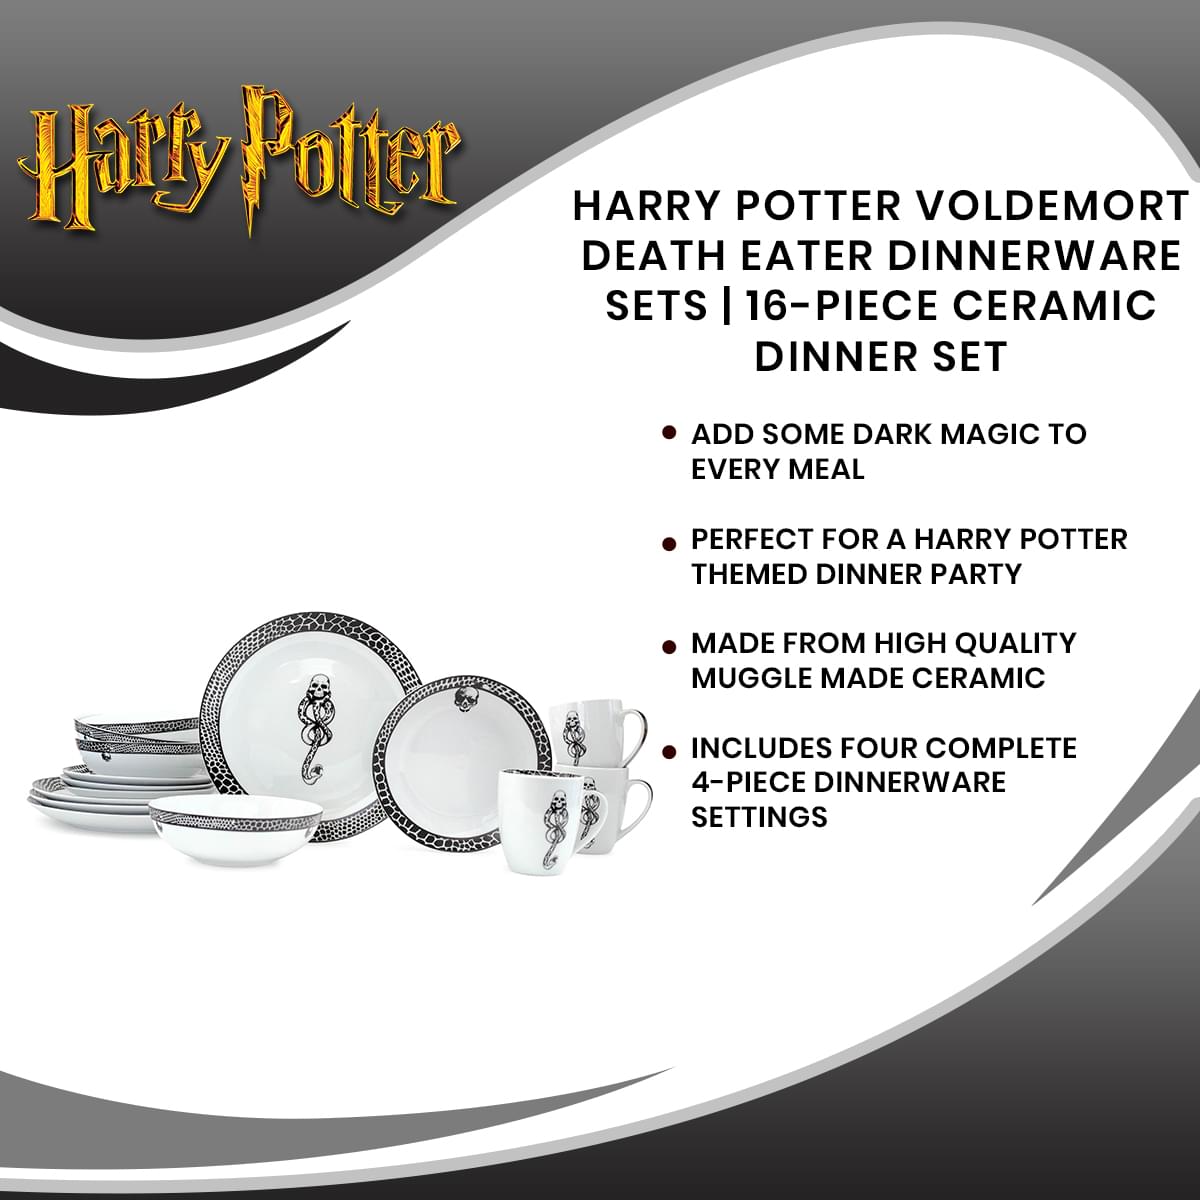 Harry Potter Voldemort Death Eater Dinnerware Sets | 16-Piece Ceramic Dinner Set